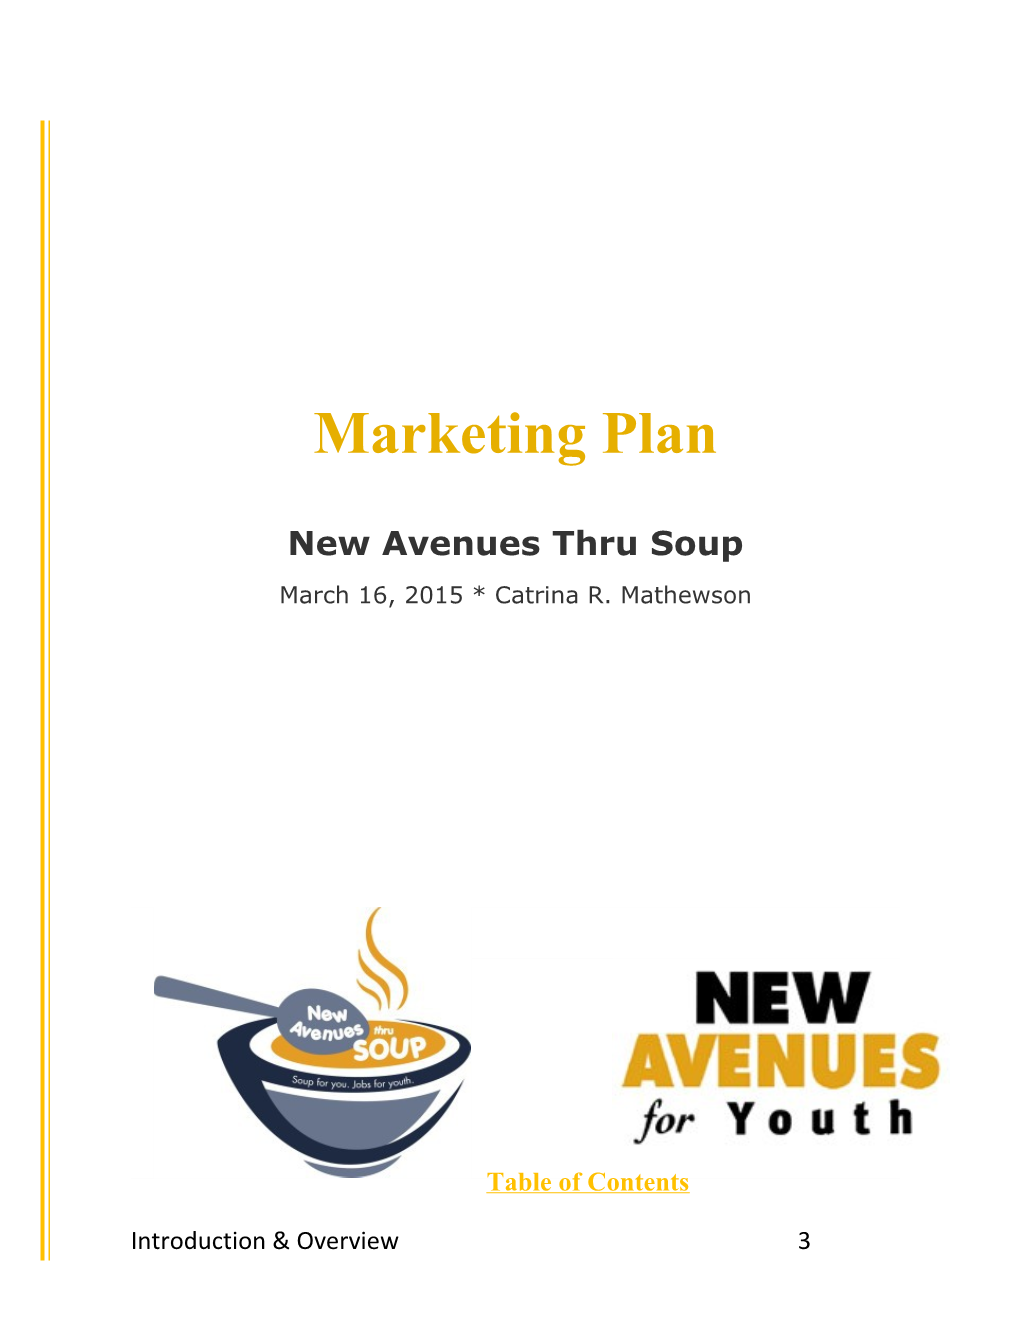 New Avenues Thru Soup